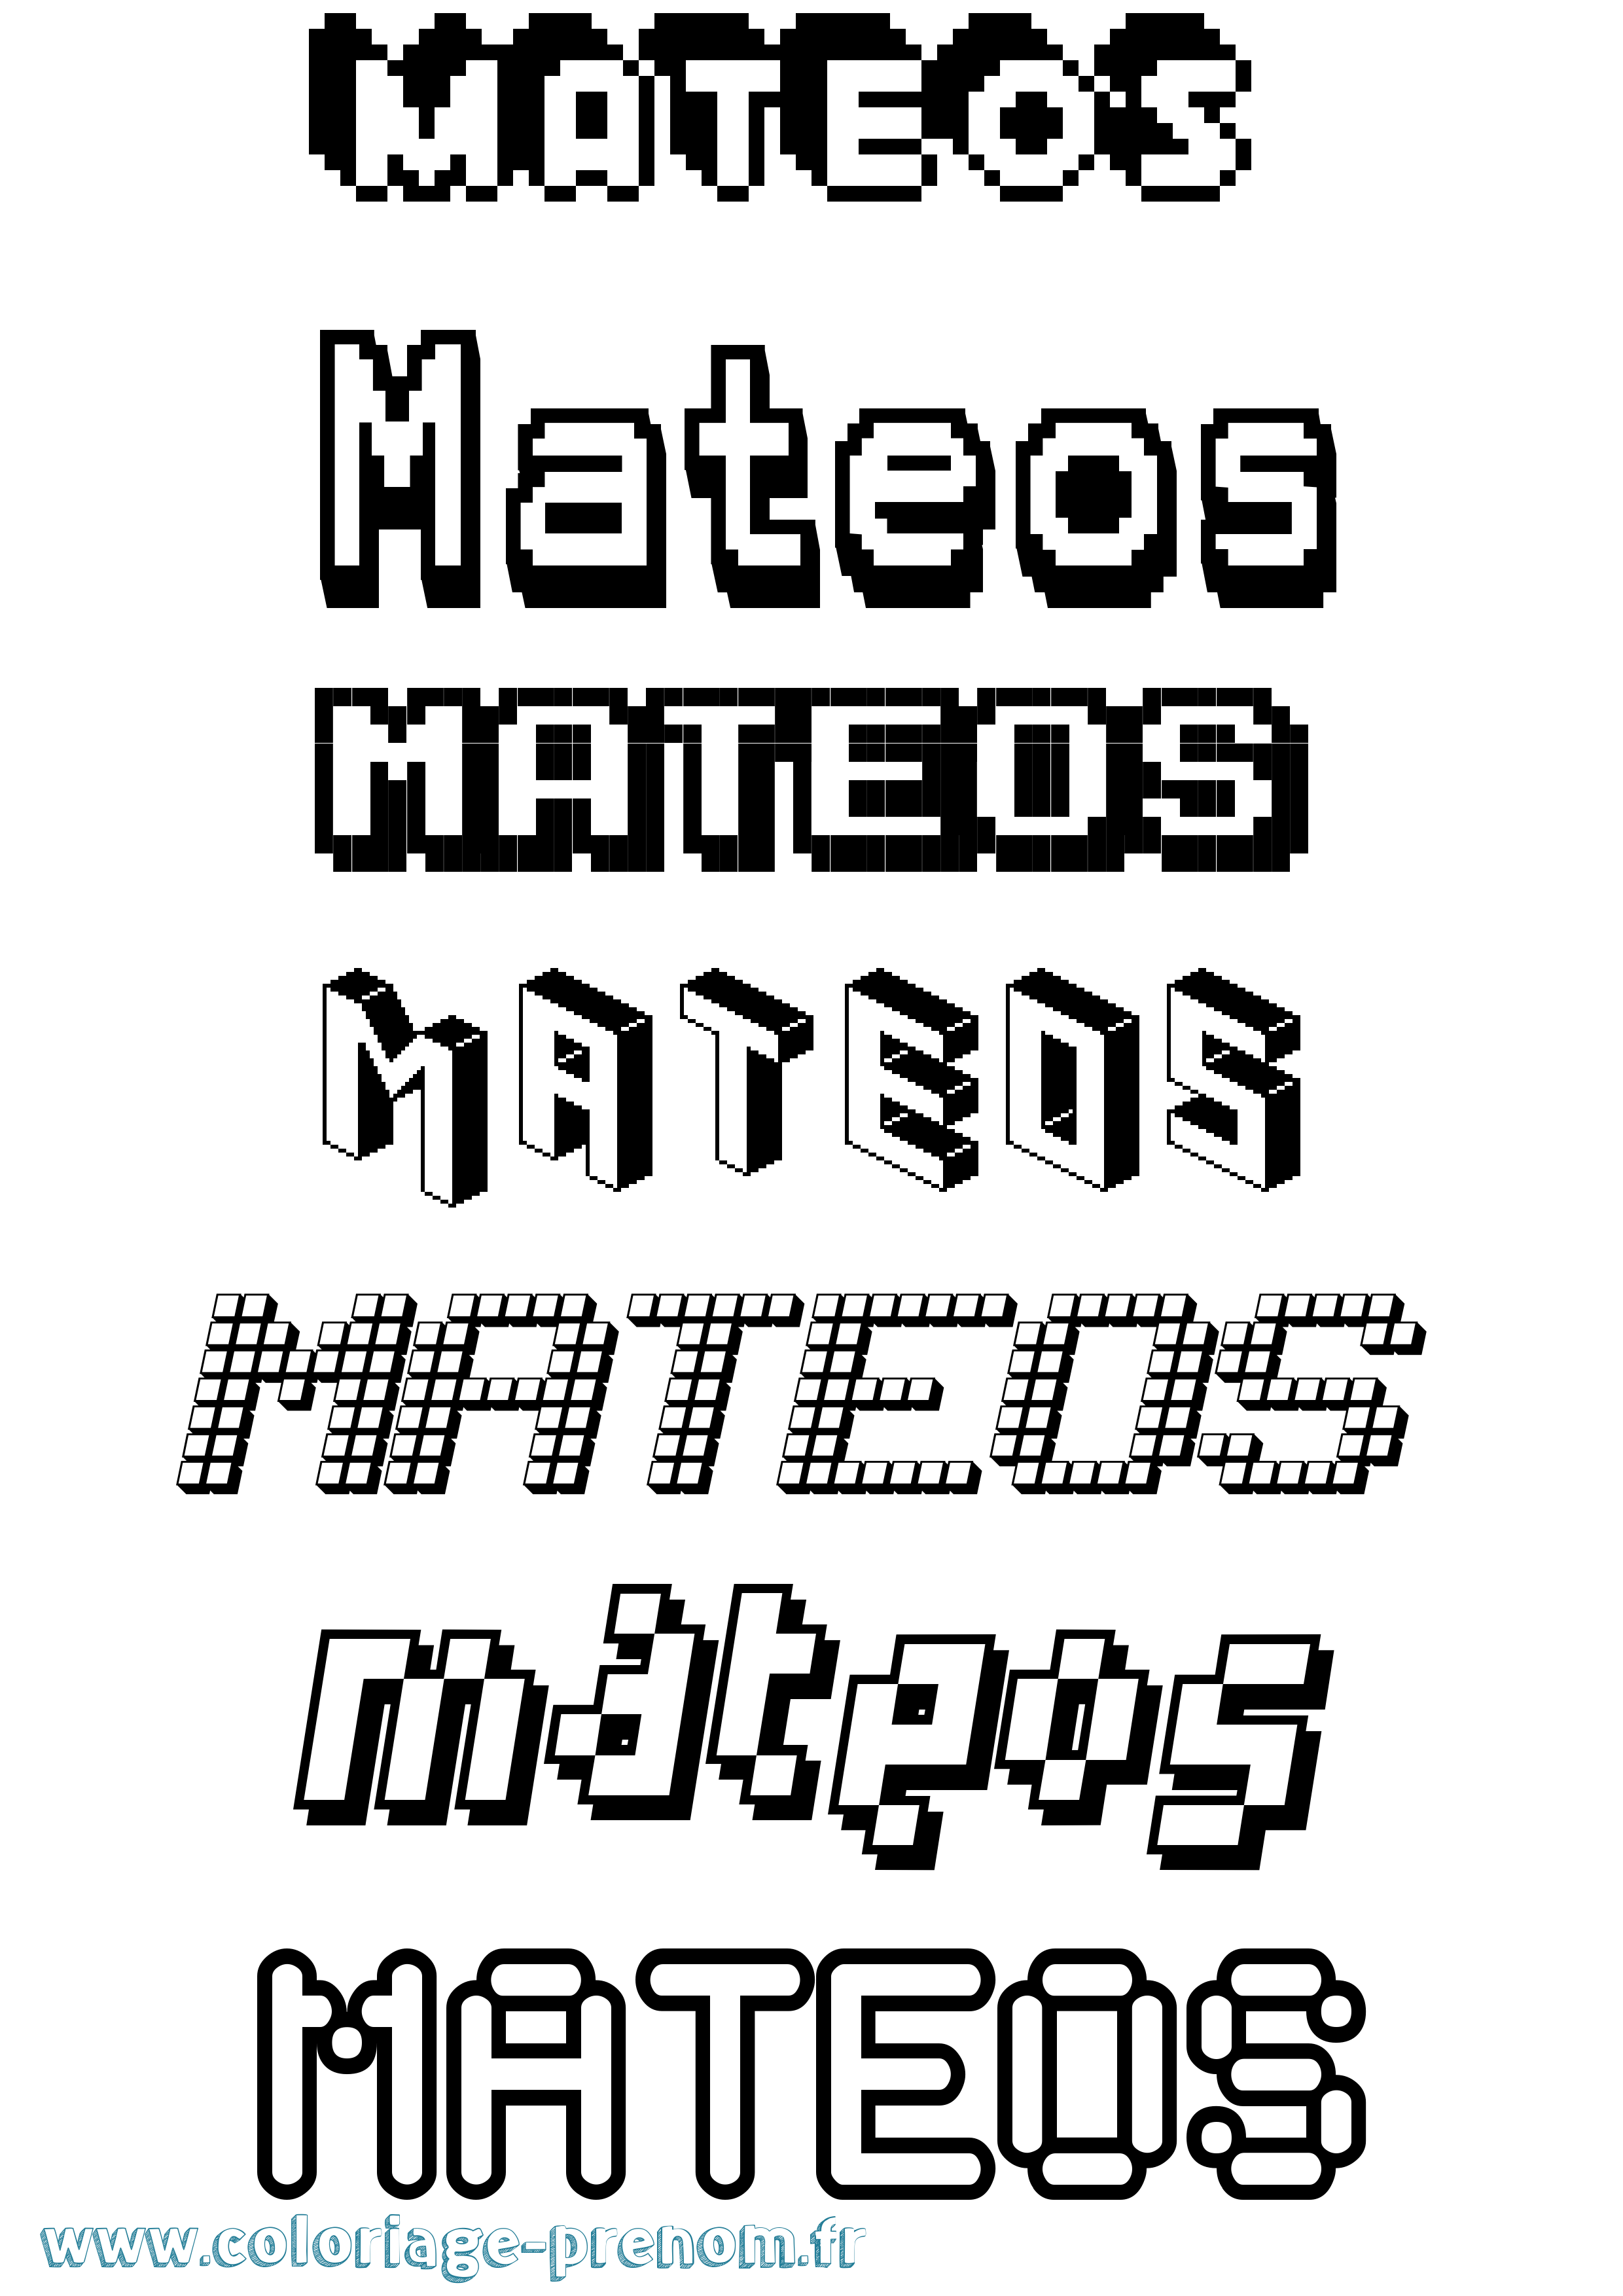 Coloriage prénom Mateos Pixel